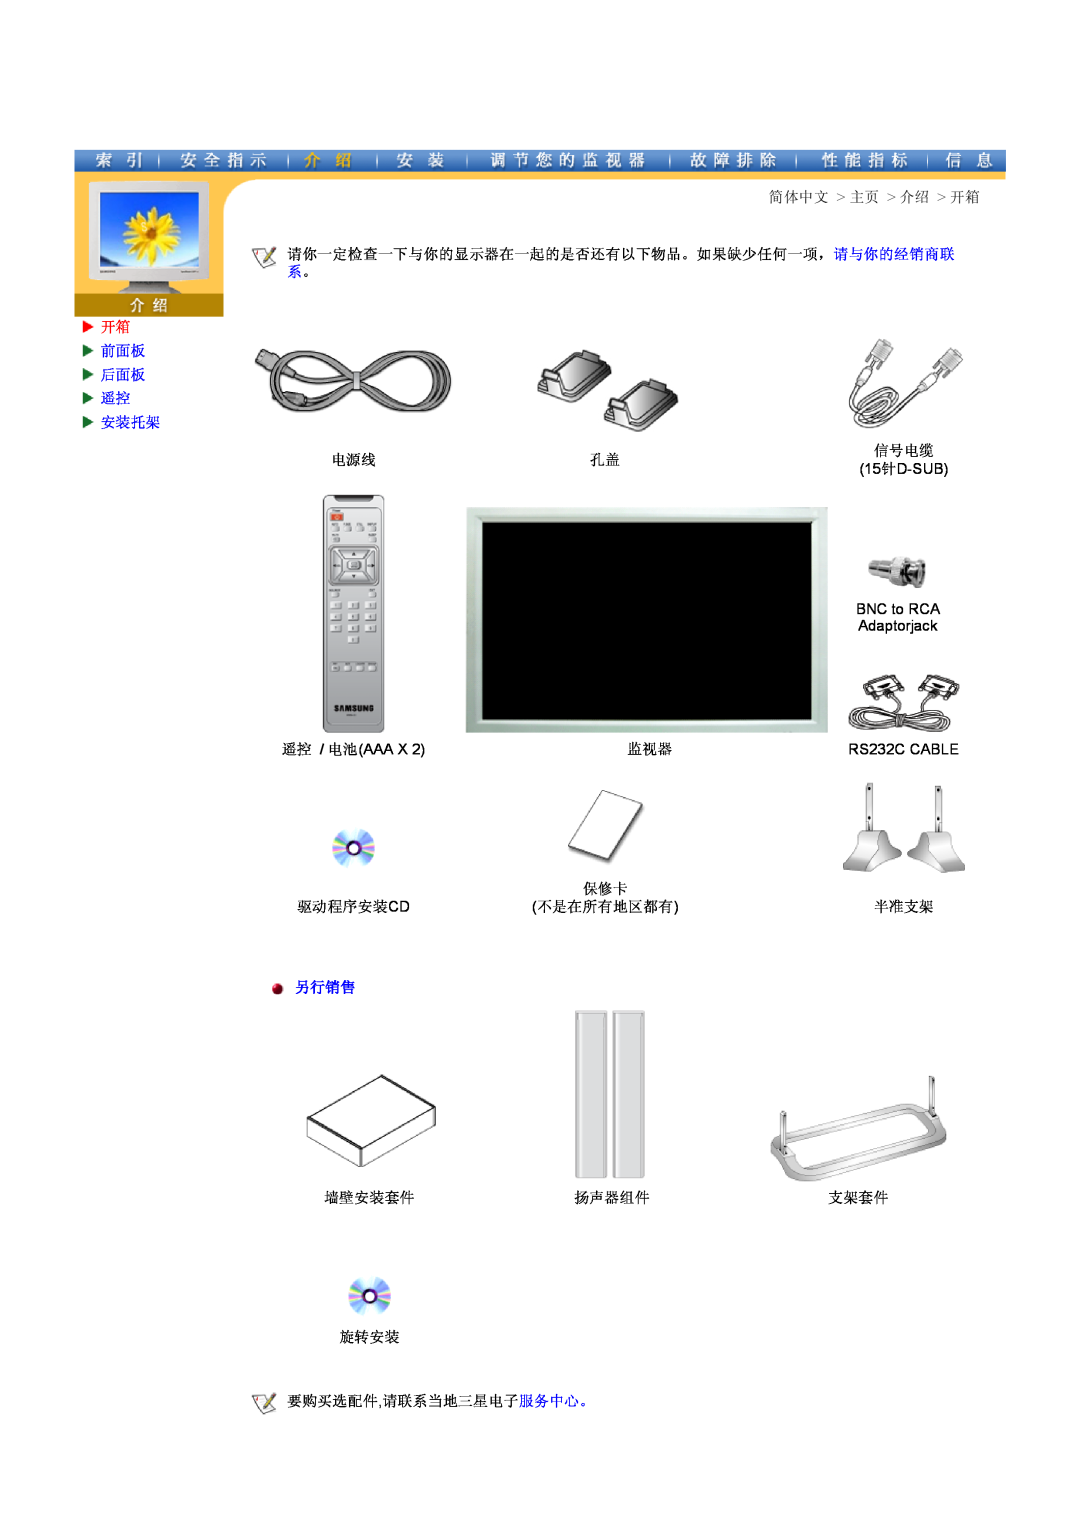 Samsung CK40PSNBG/EDC, CK40BSNS/EDC, CK40PSNS/EDC manual 另行销售, 前面板 后面板 遥控 安装托架 